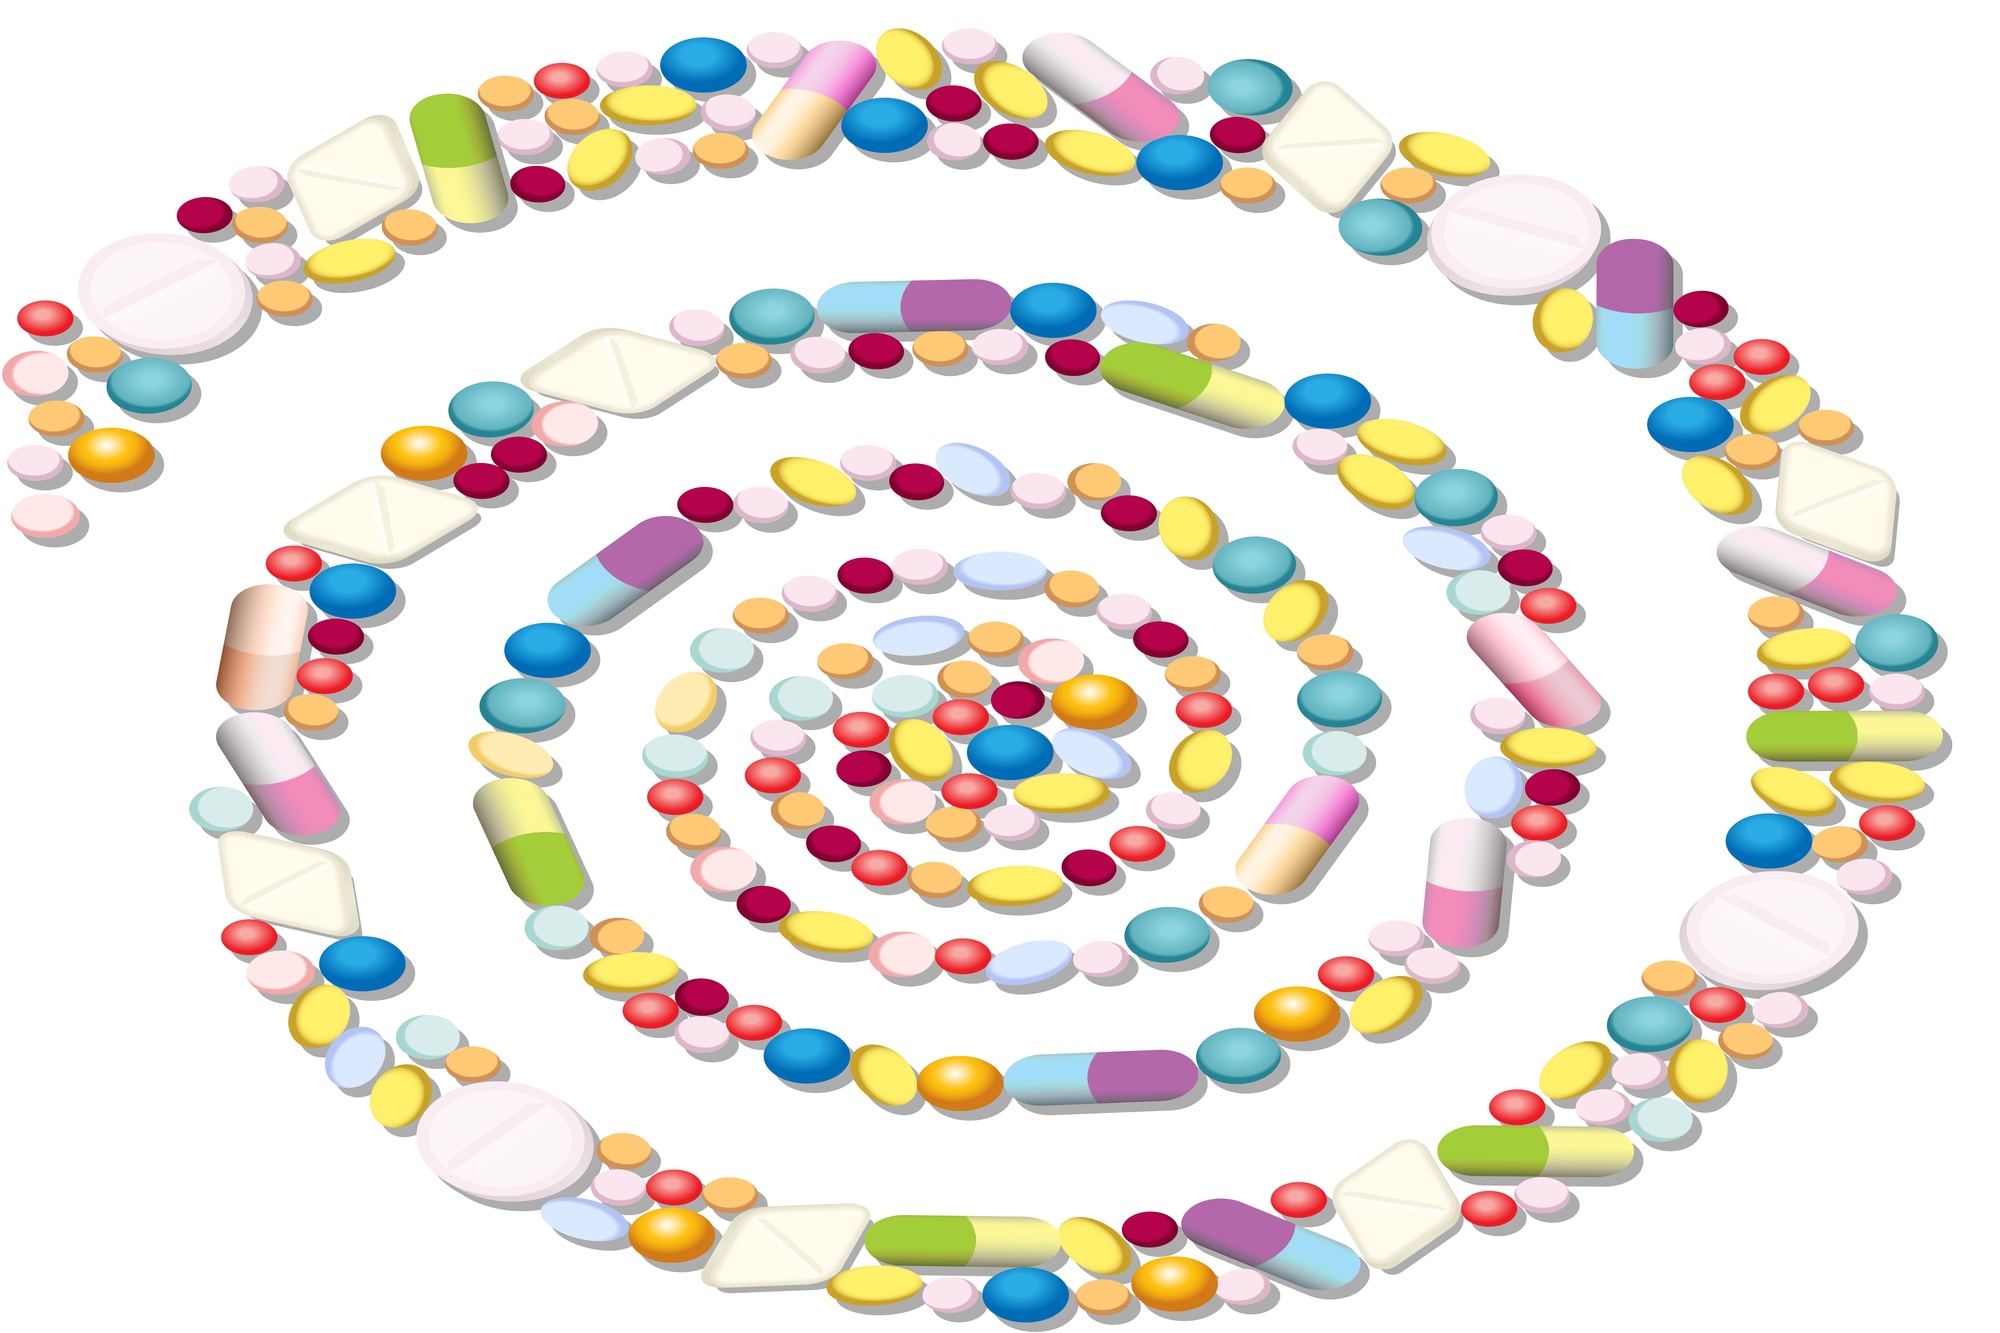 Pills organized in a spiral shape